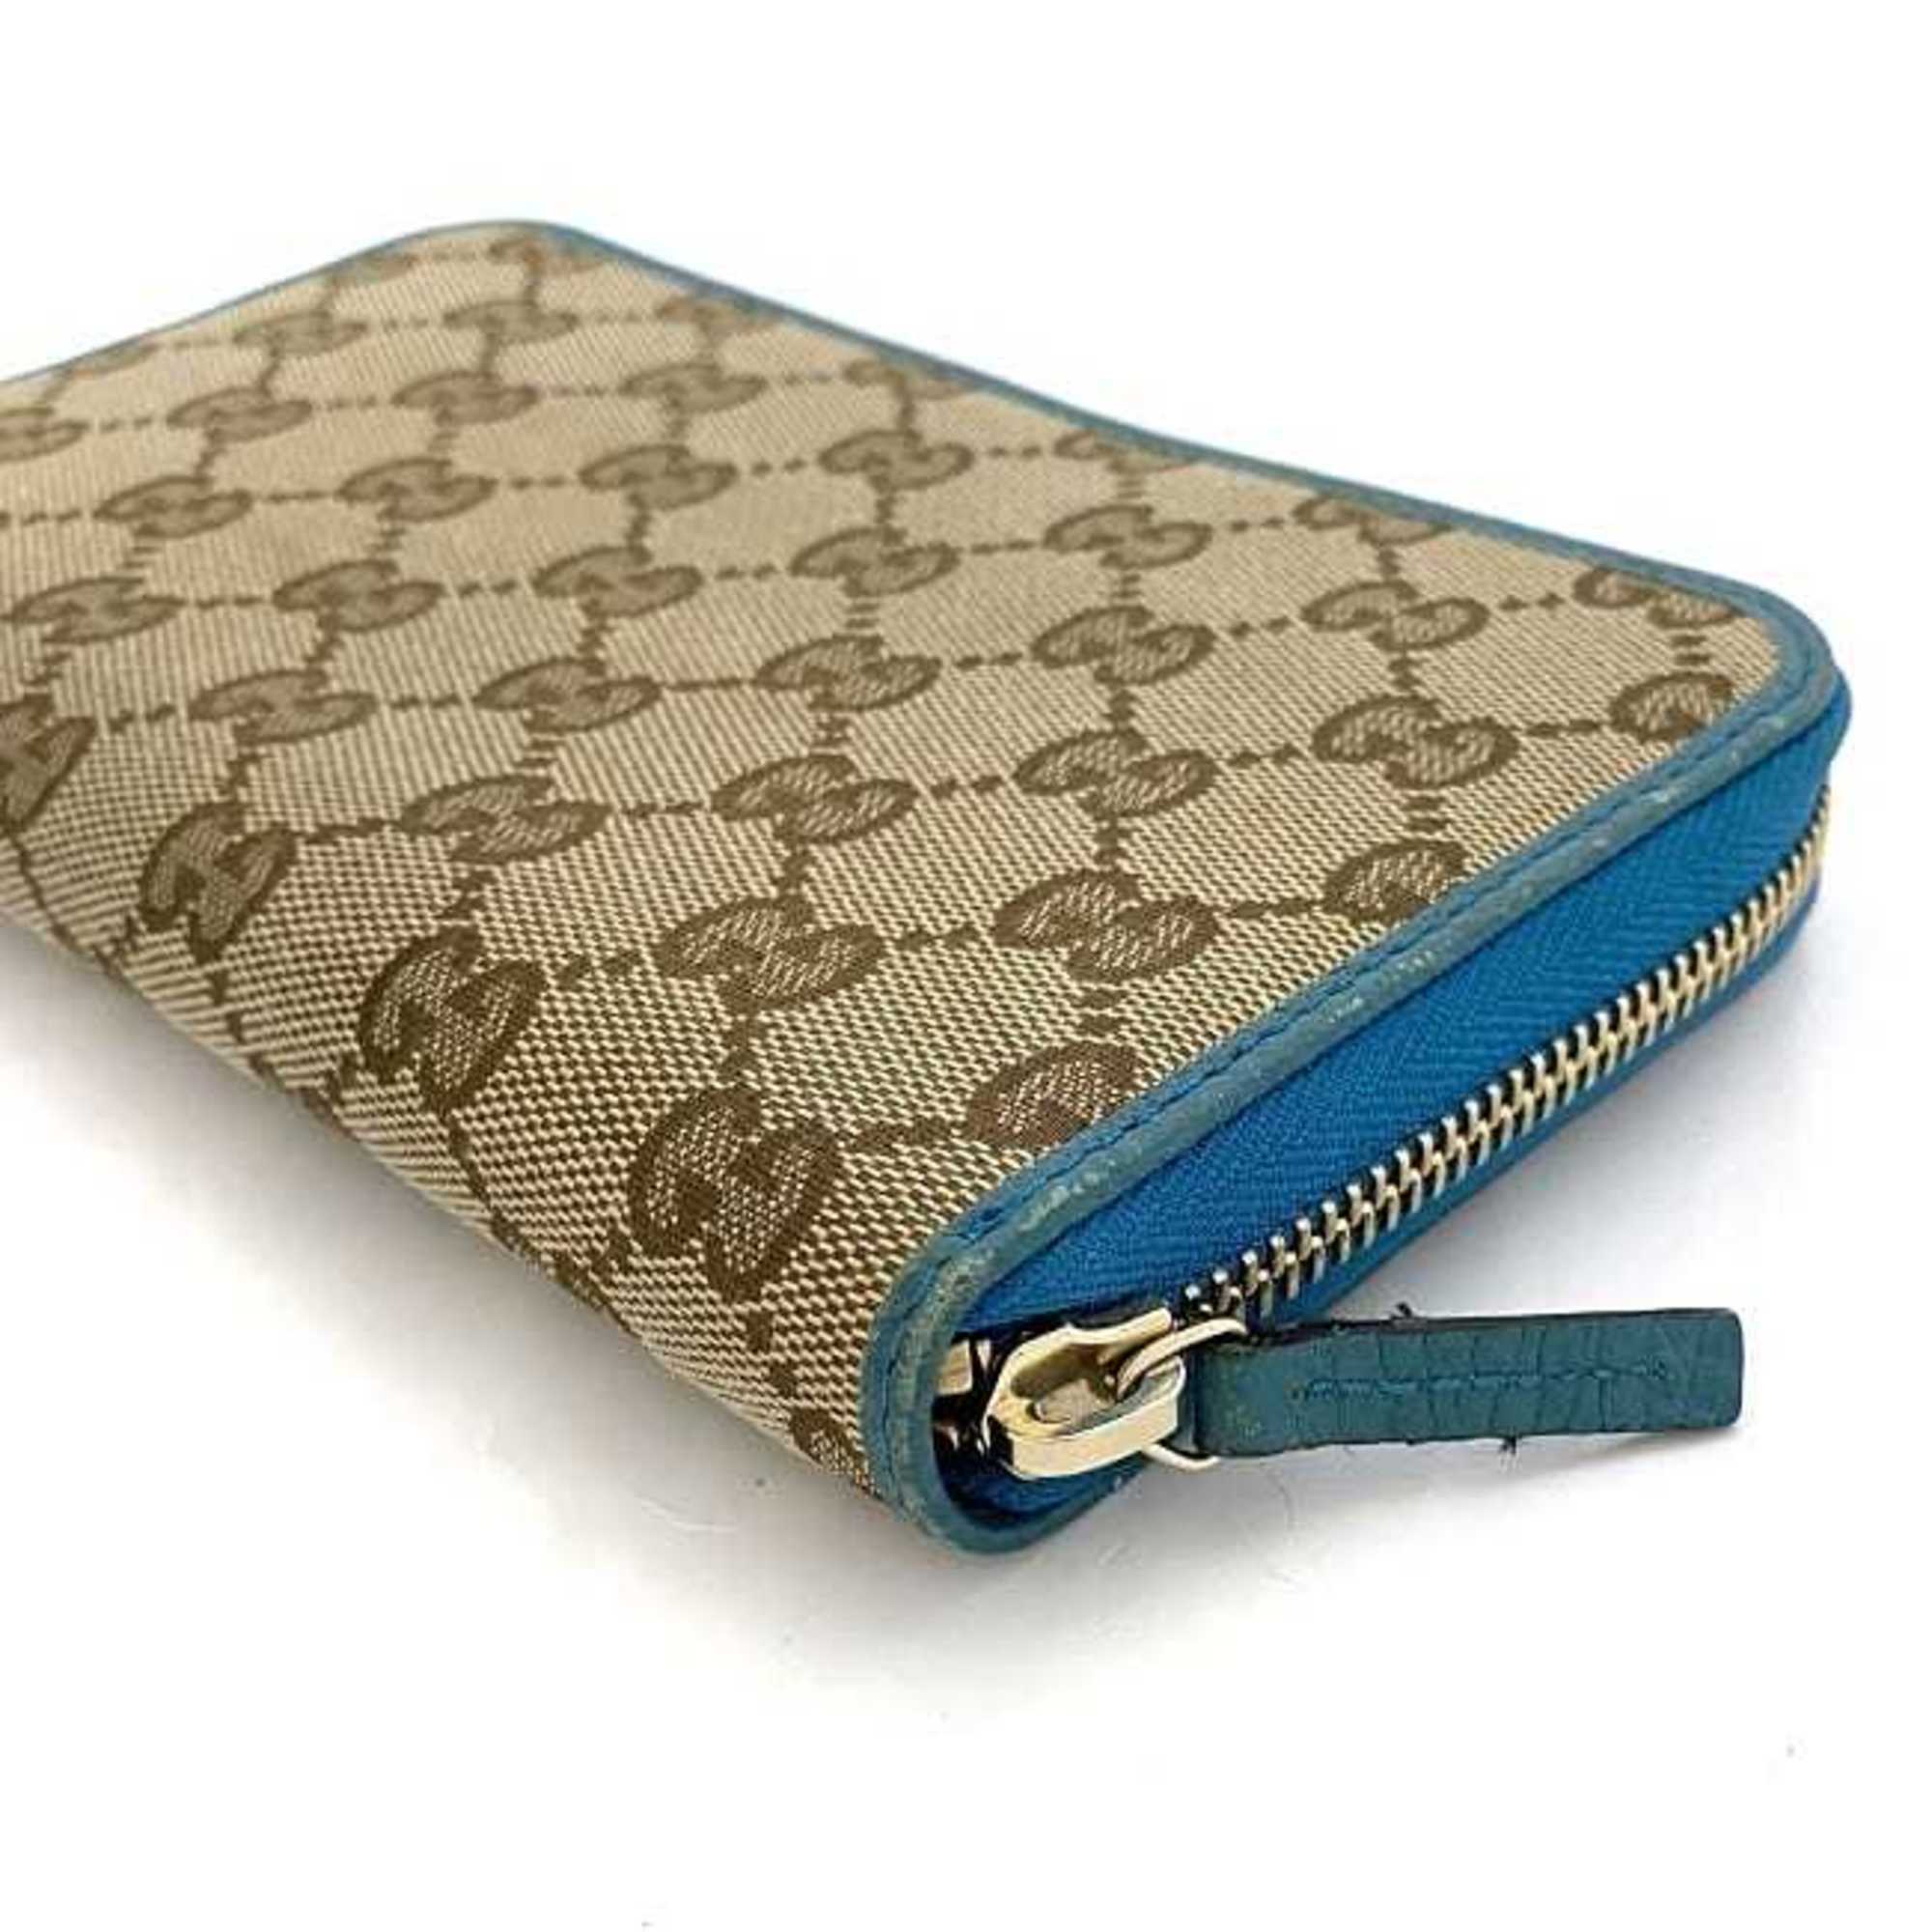 Gucci Long Wallet Beige Blue 363423 Purse Canvas Leather GUCCI GG Women's